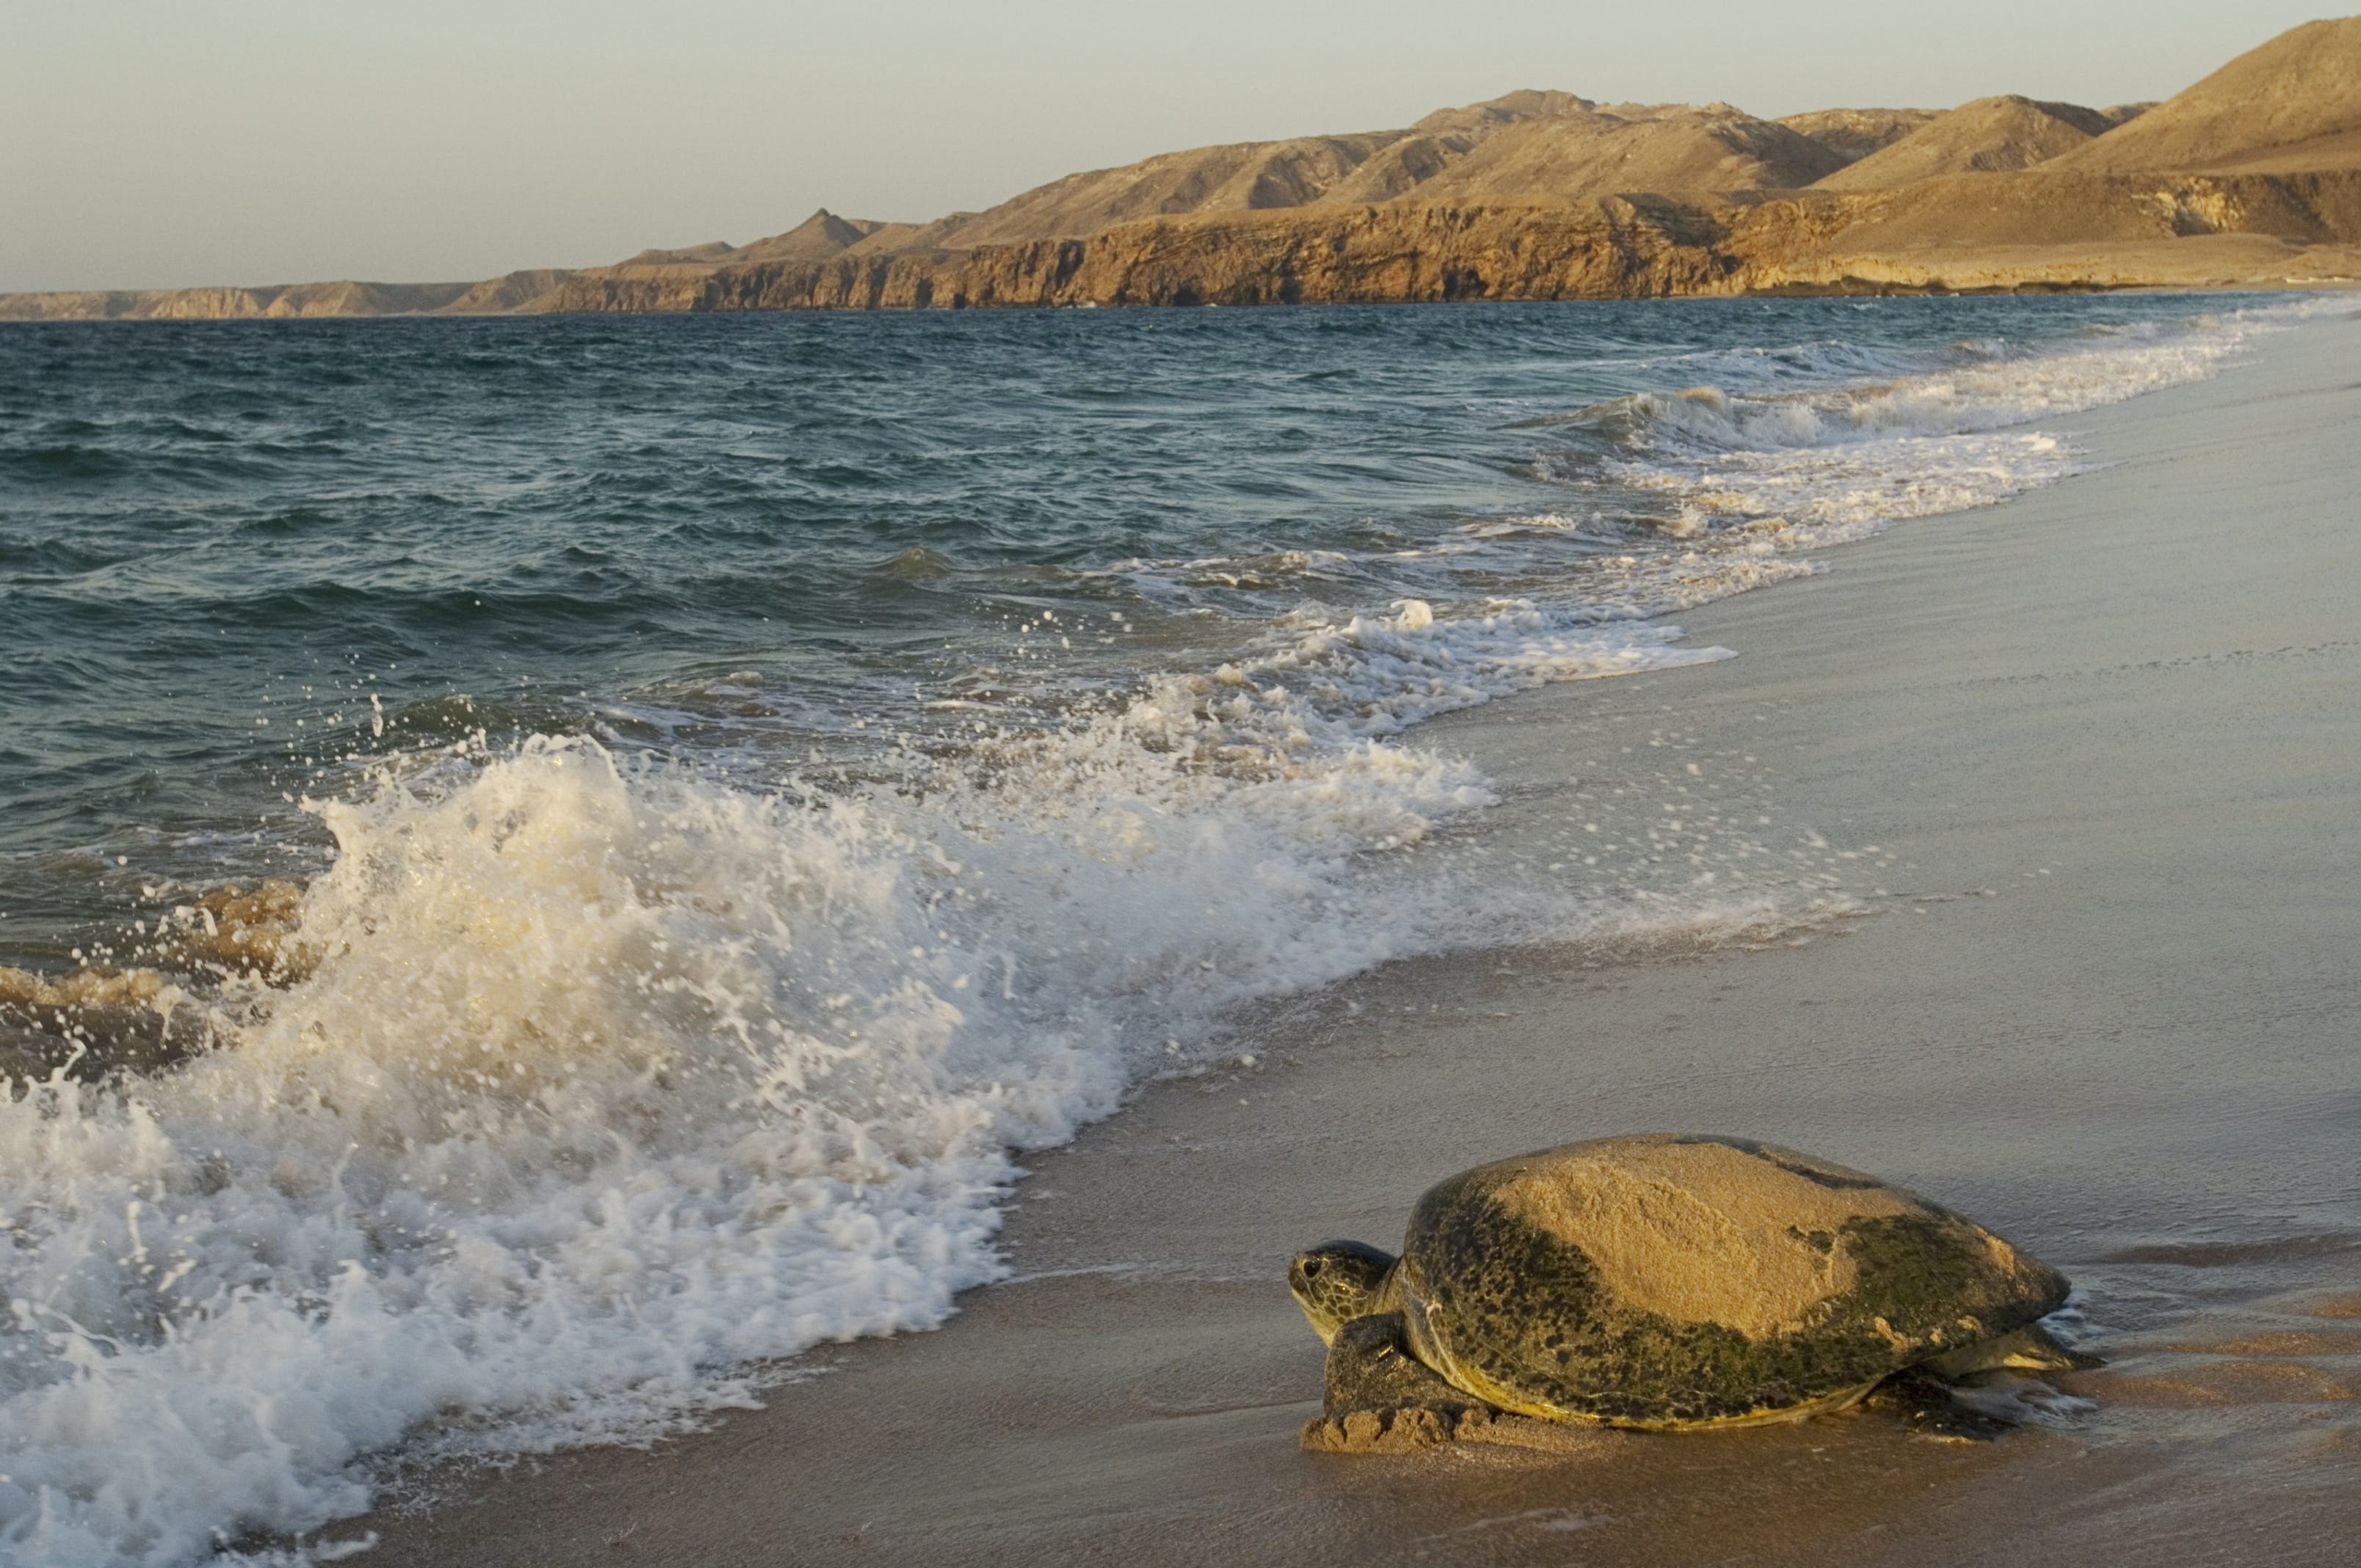 Work begins on turtle sanctuary in Ras al Jinz, Oman